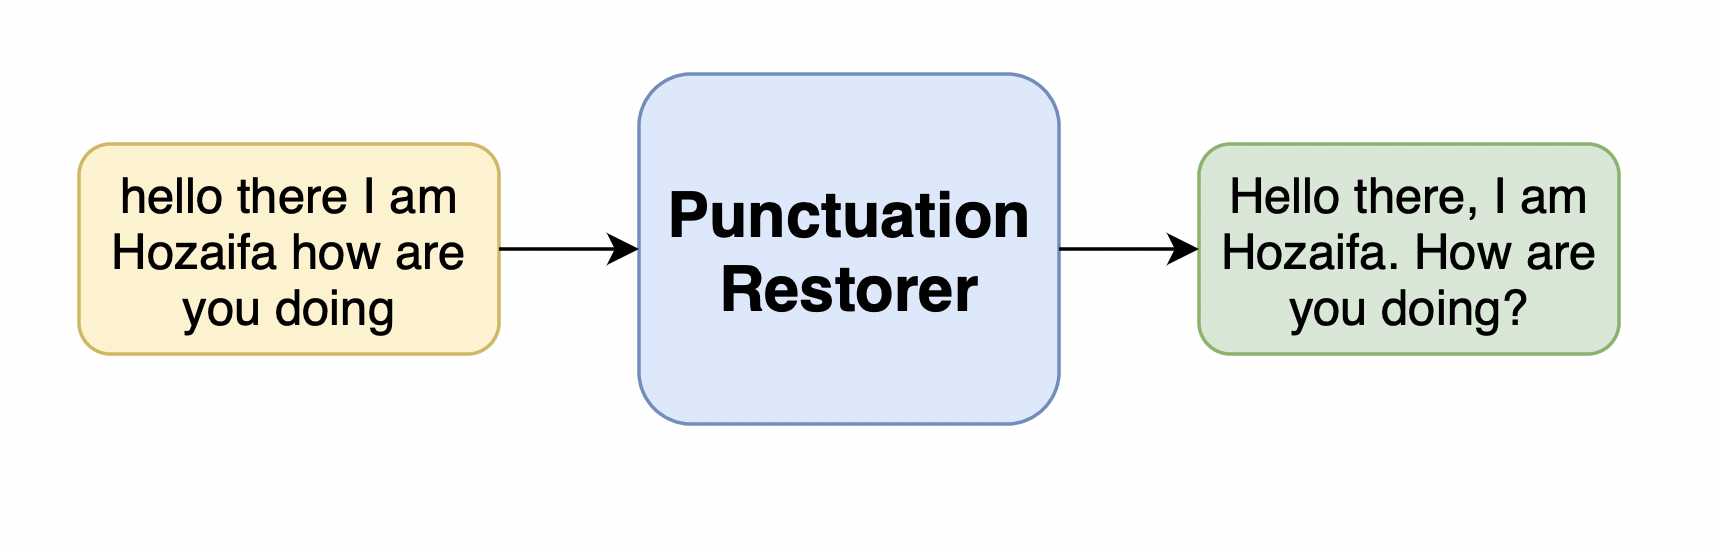 Punctuation Restorer FC